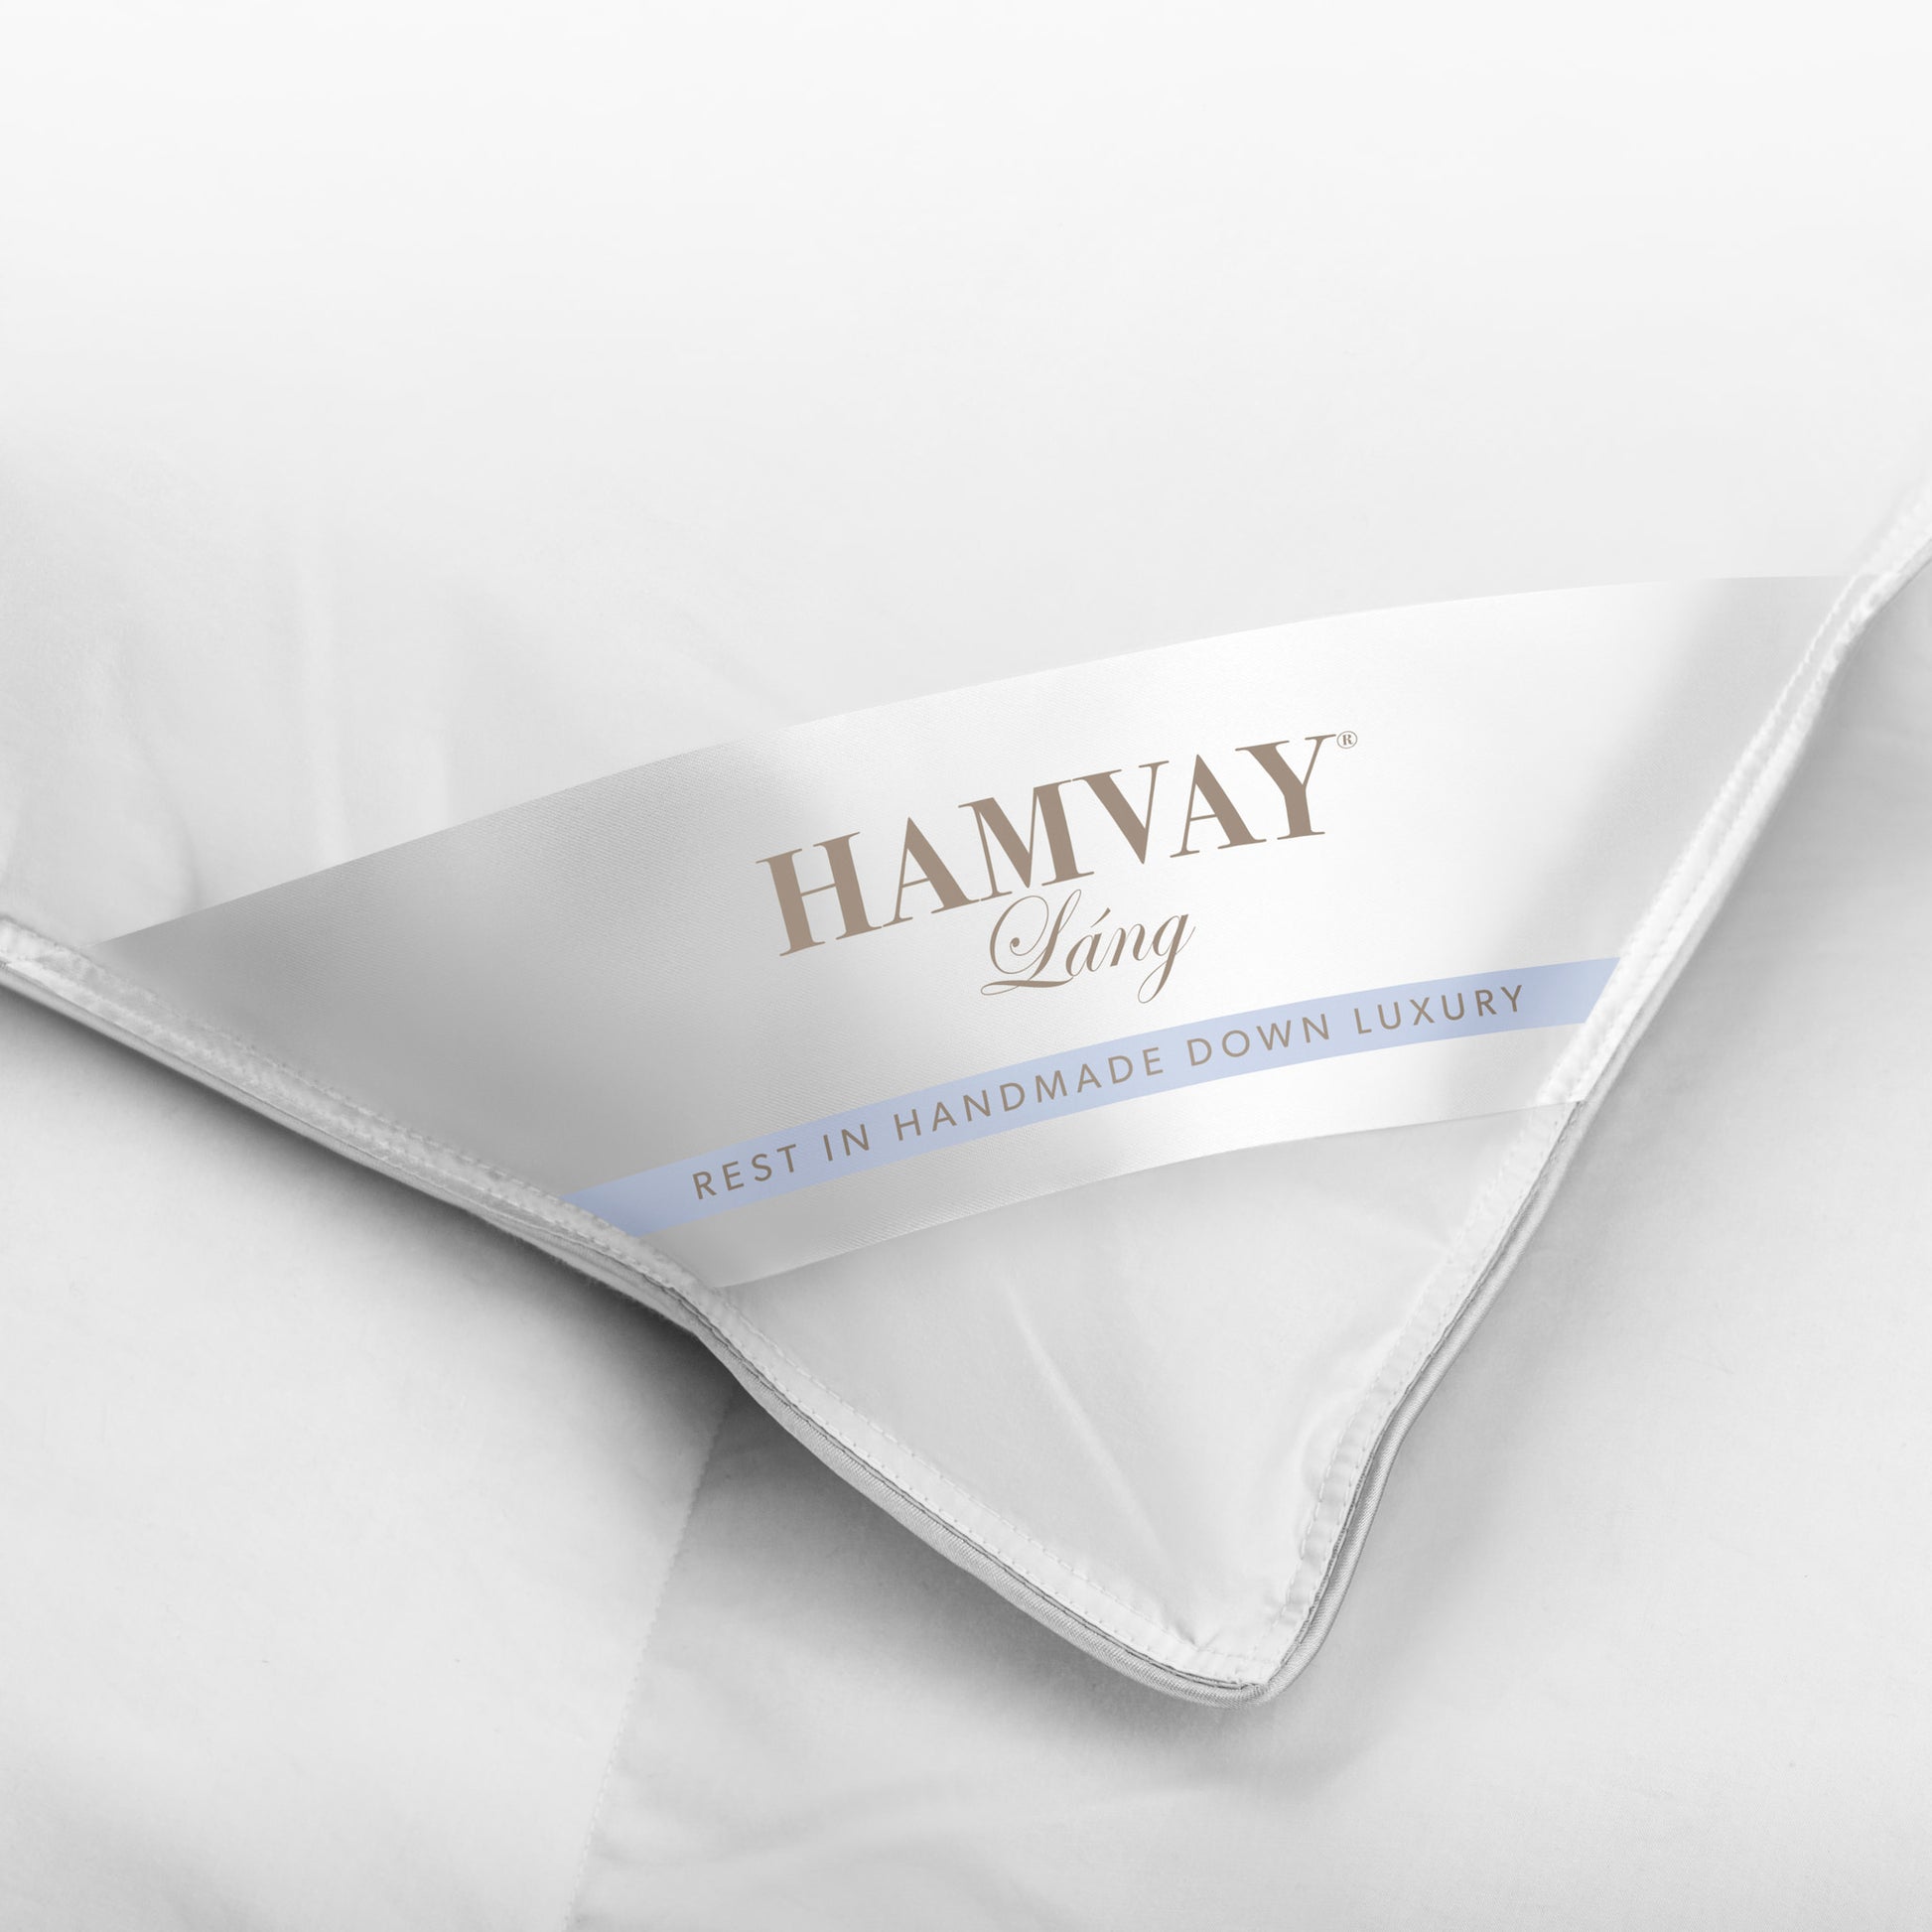 Hamvay-Láng PureComfort comforter corner label captured closely